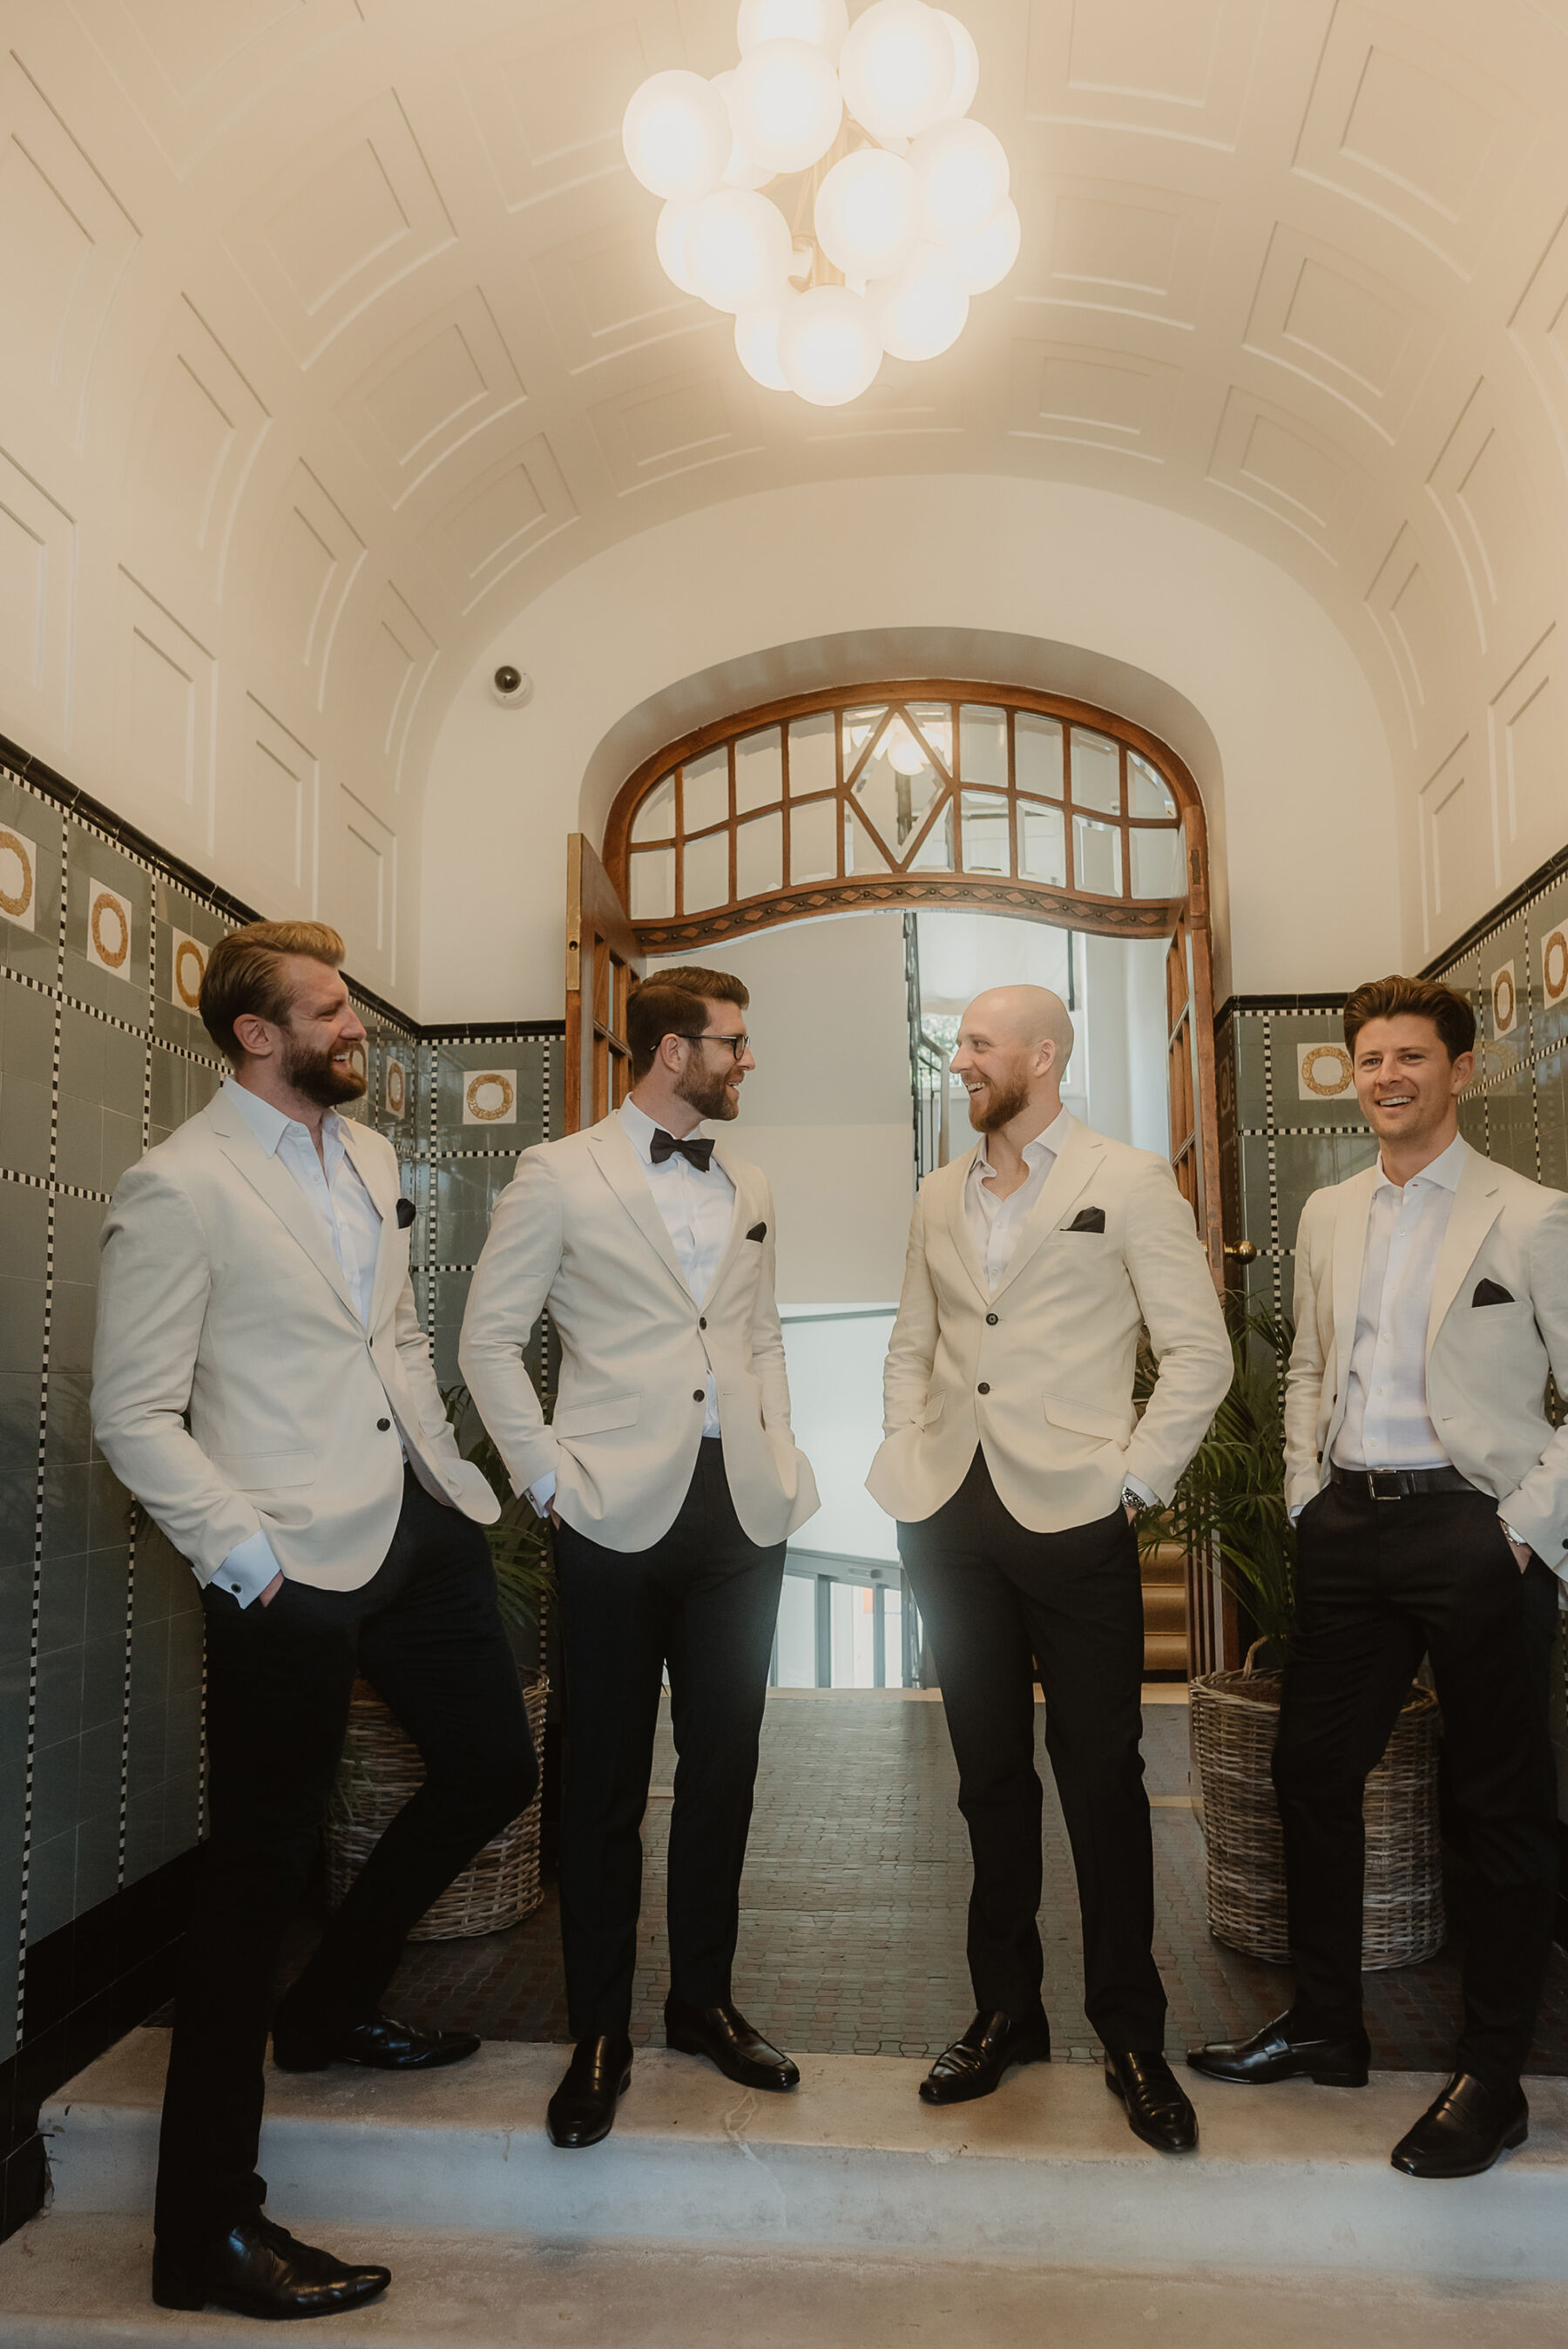 Groom and groomsmen in white tuxedos.